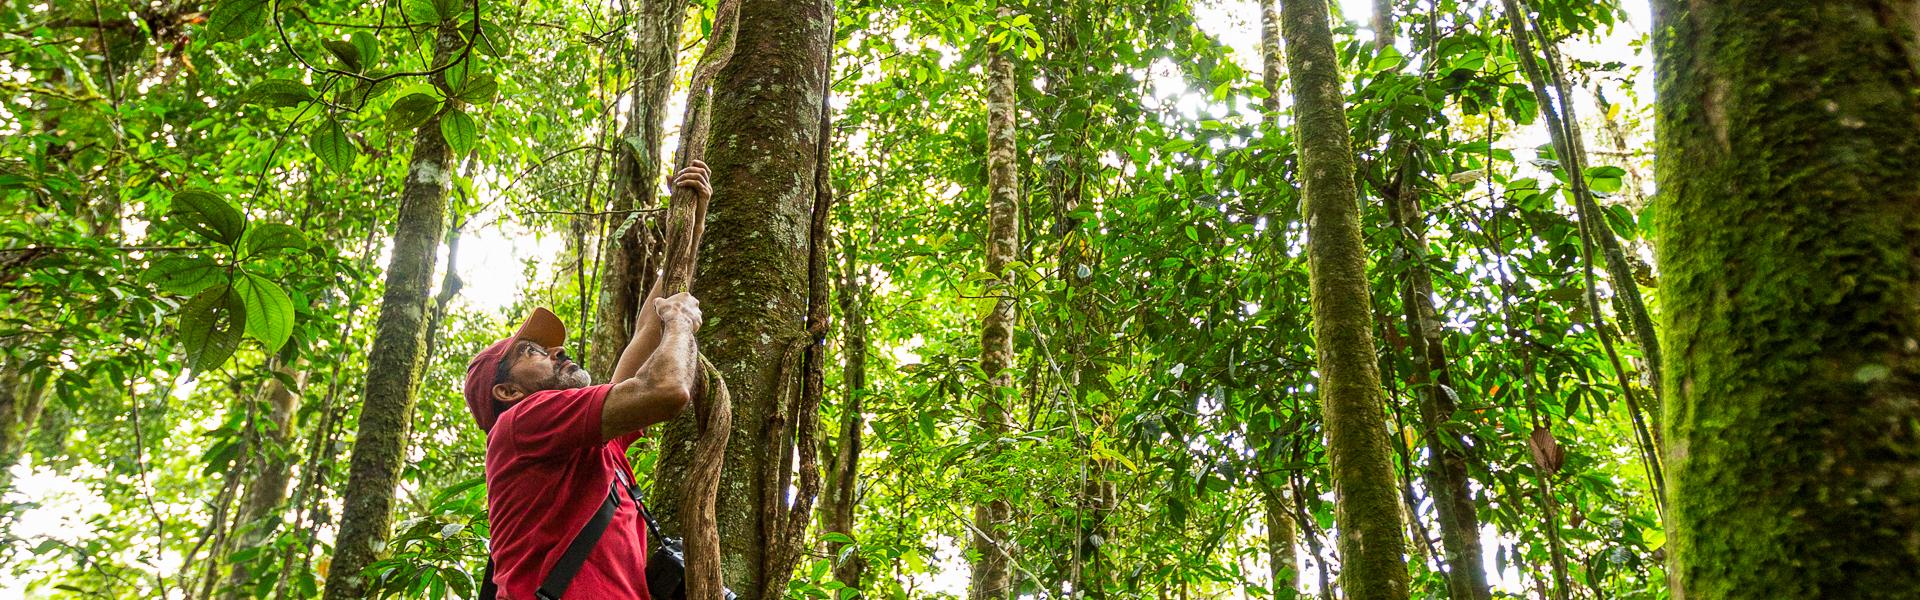 Baumriesen im Regenwald |  Alfonso Tandazo, Surtrek / Chamleon